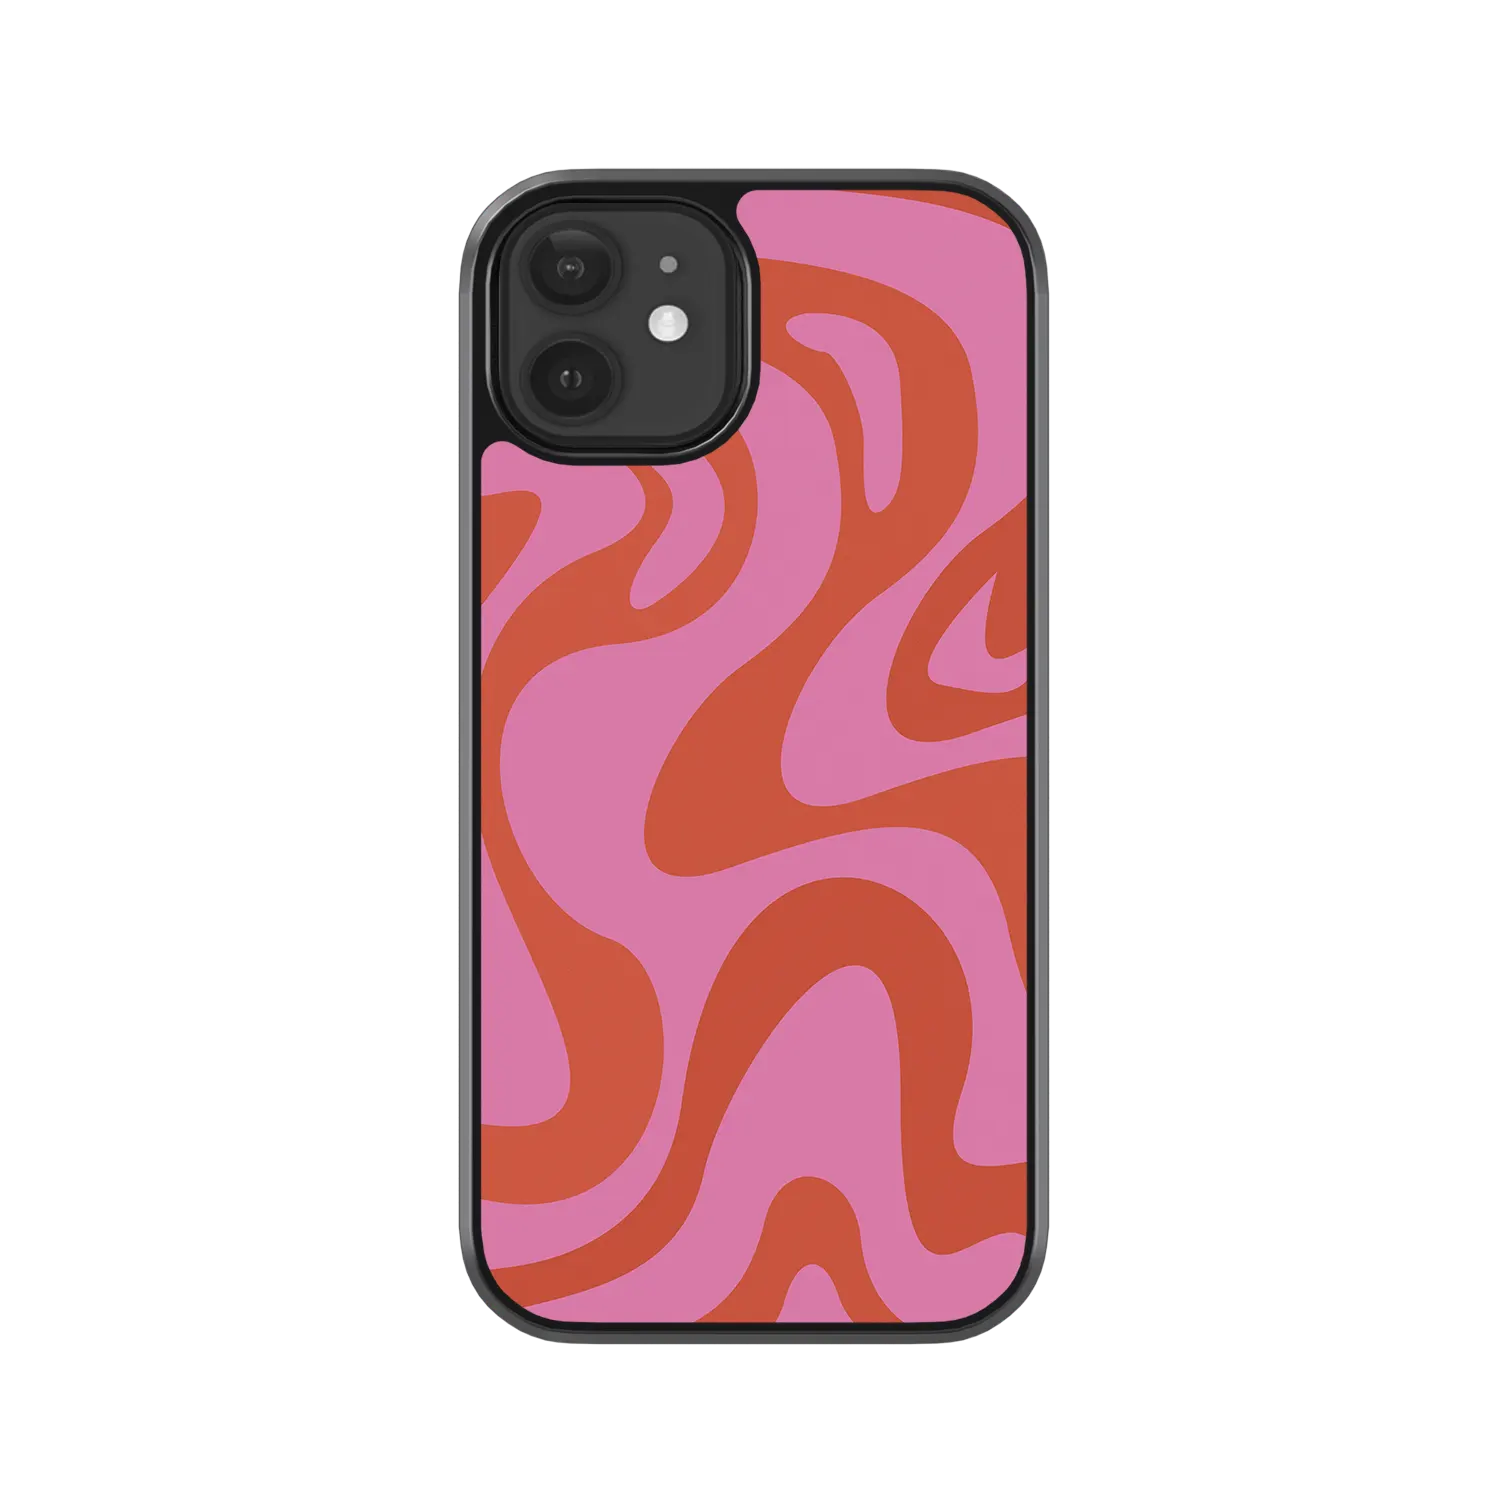 trip wave iphone 12 case